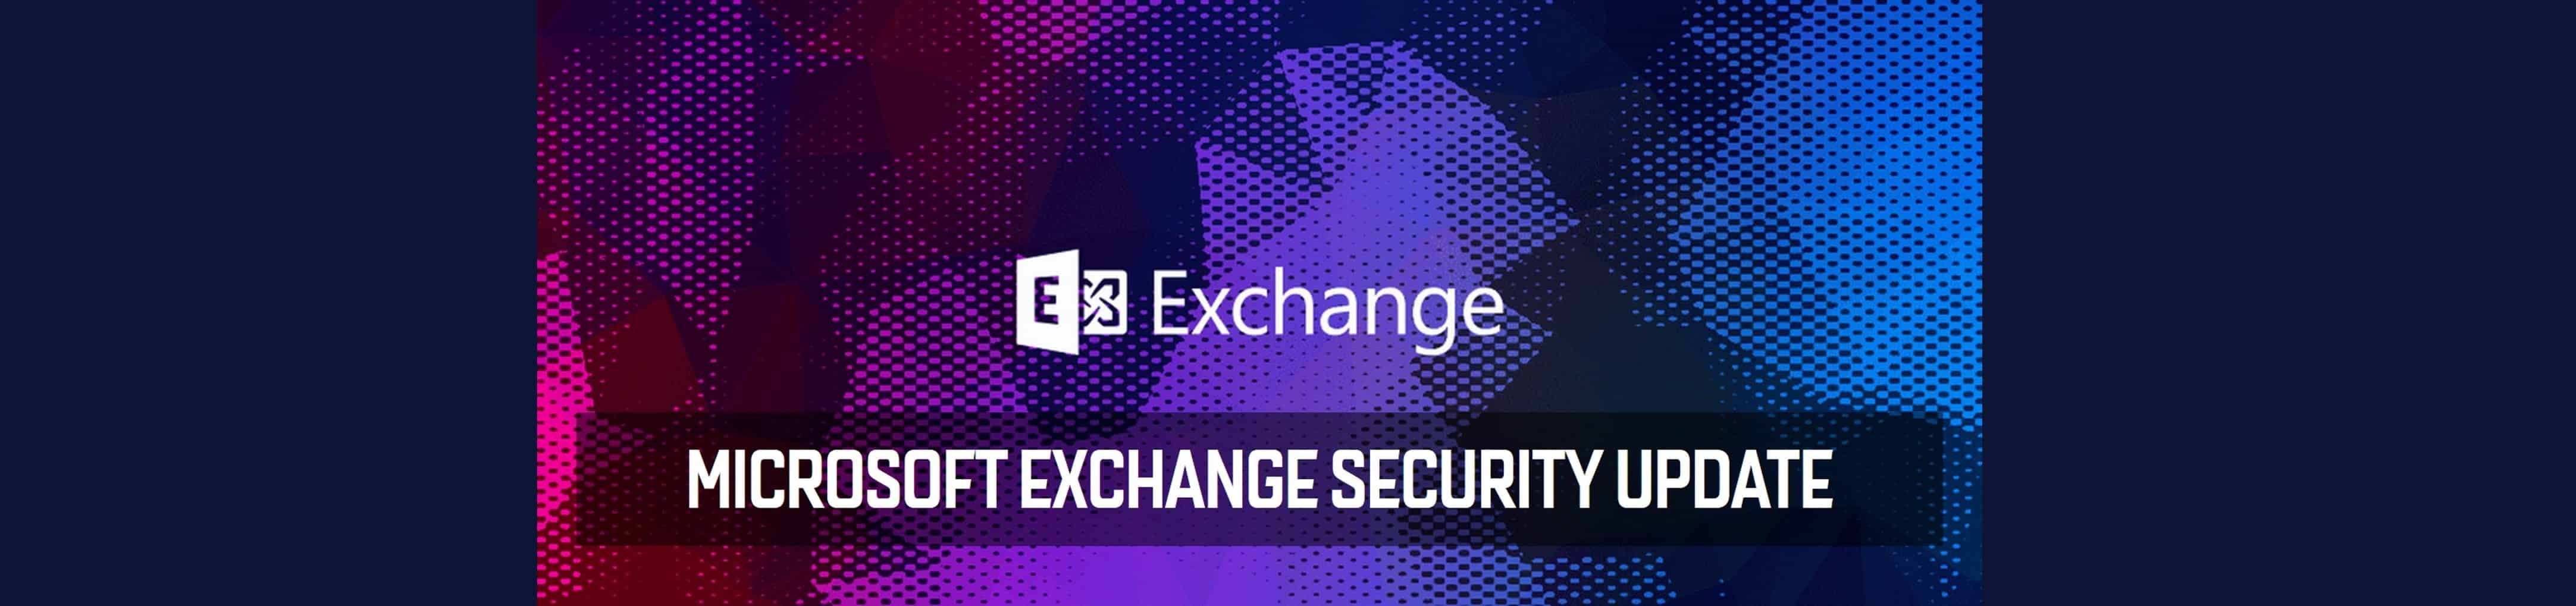 Kenfil Microsoft Exchange Security Update Landing Page  Kenfil Hong